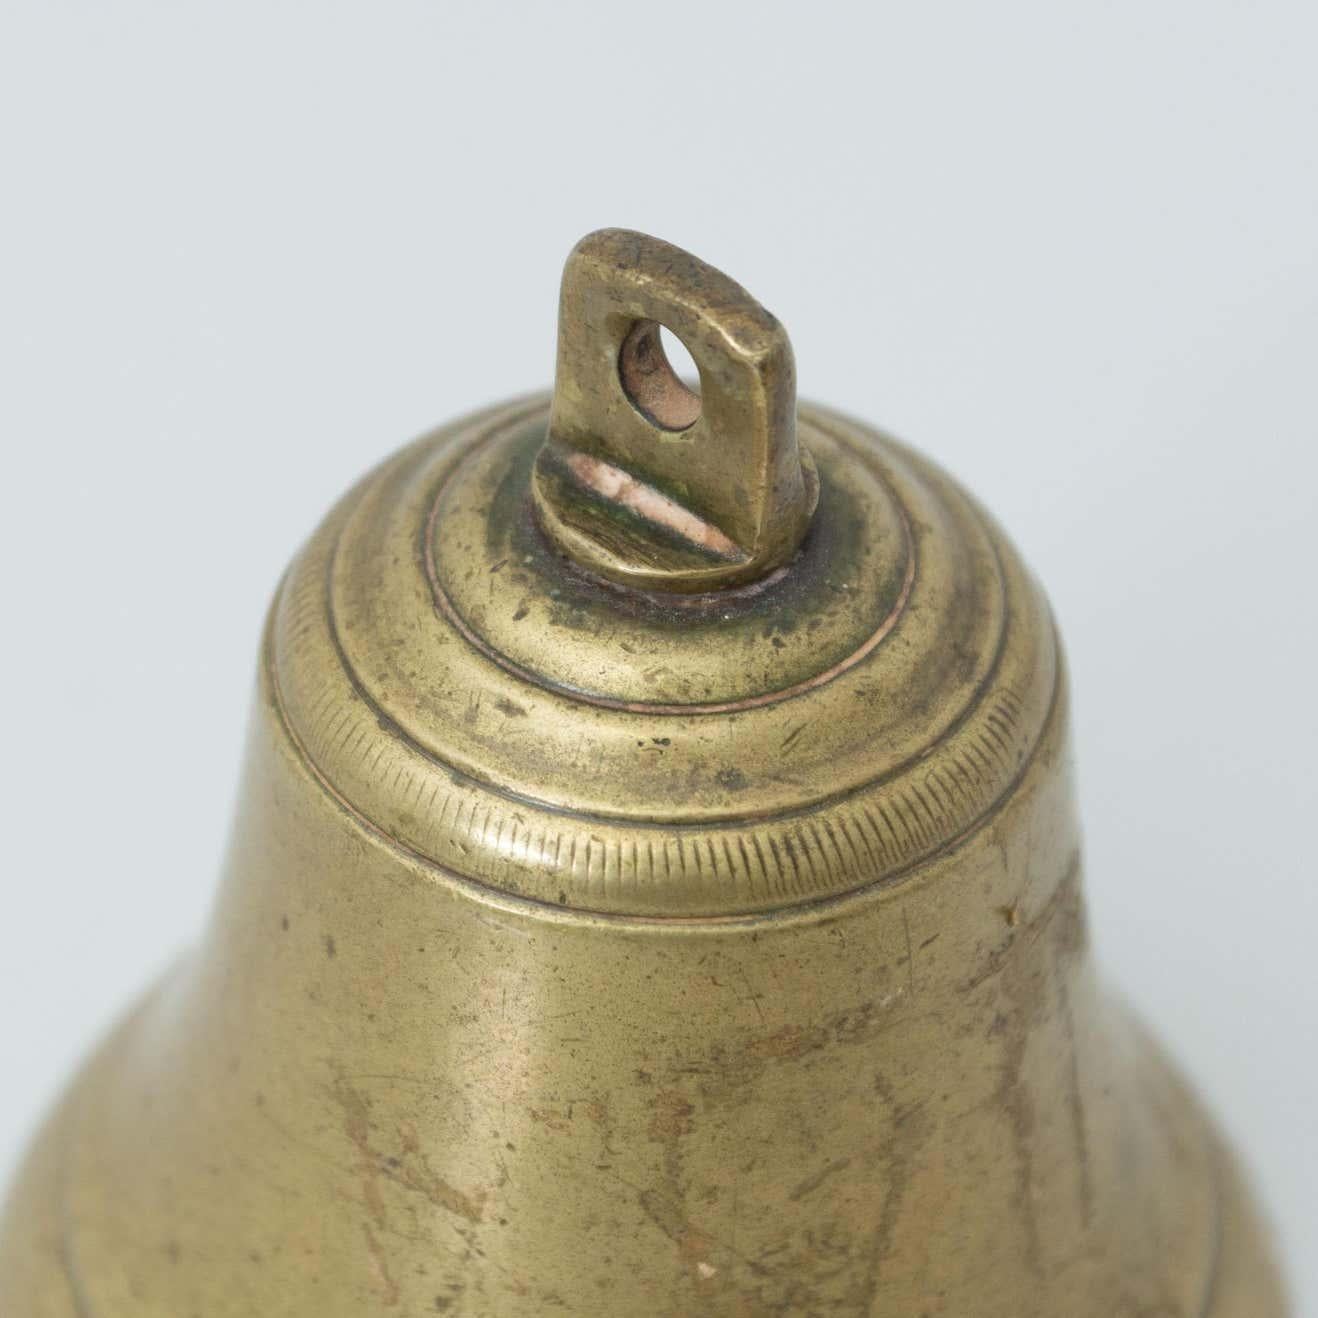 European Traditional Spanish Rustic Bronze Bell, circa 1880